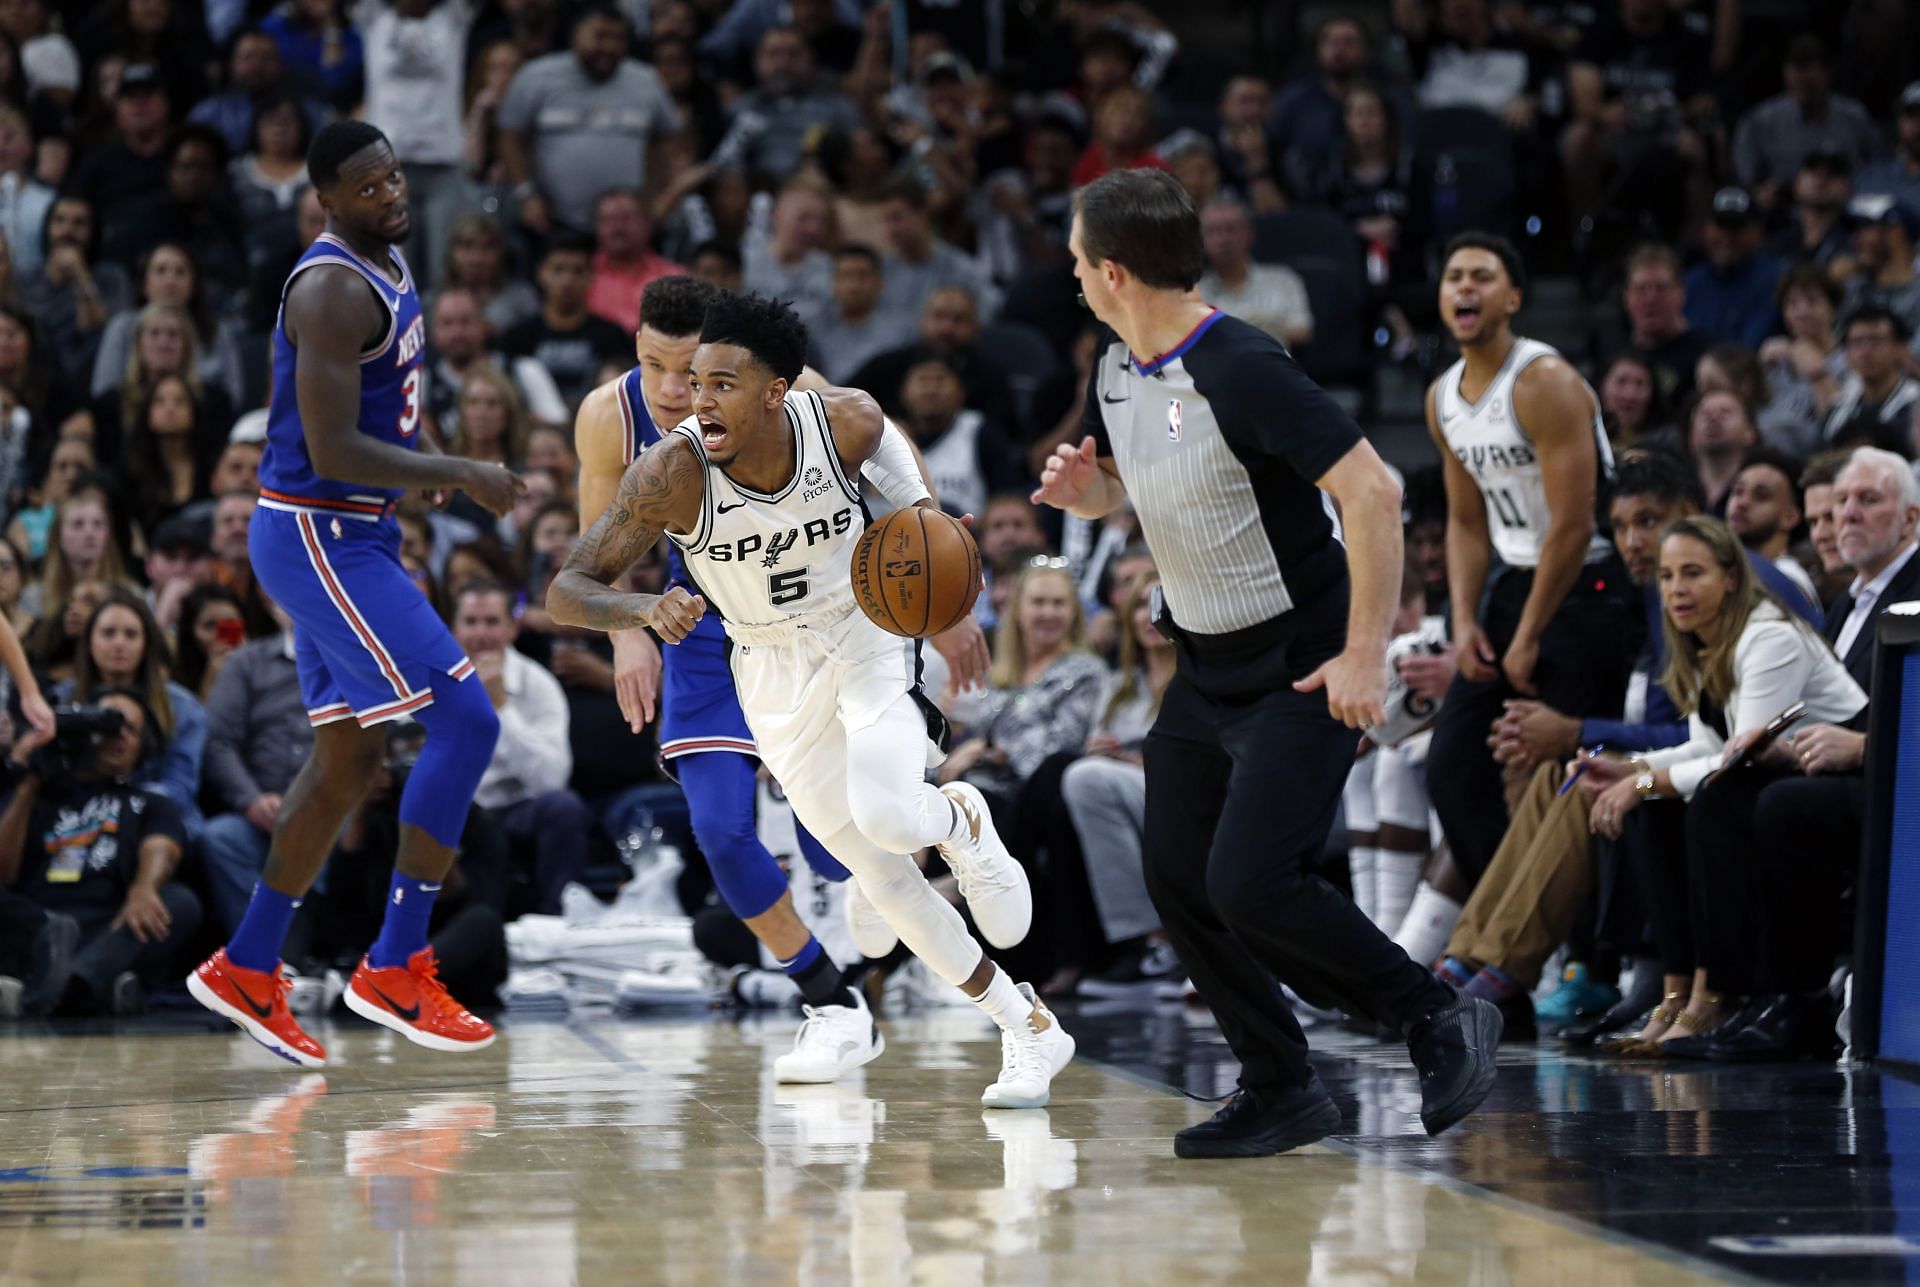 New York Knicks will play the San Antonio Spurs on Tuesday.